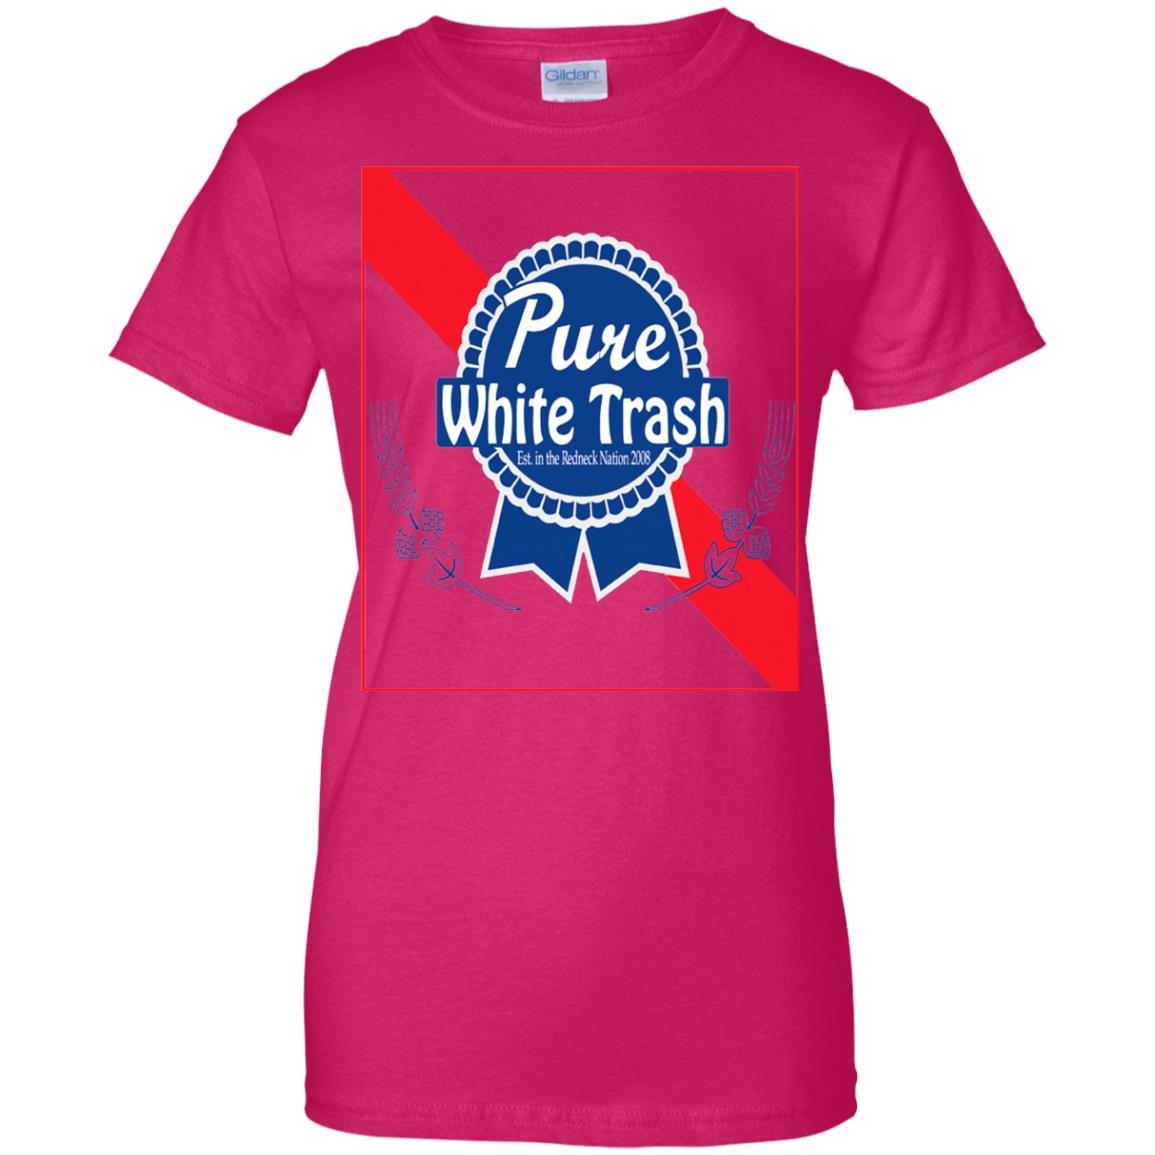 Pure White Trash Shirt - 10% Off - FavorMerch.